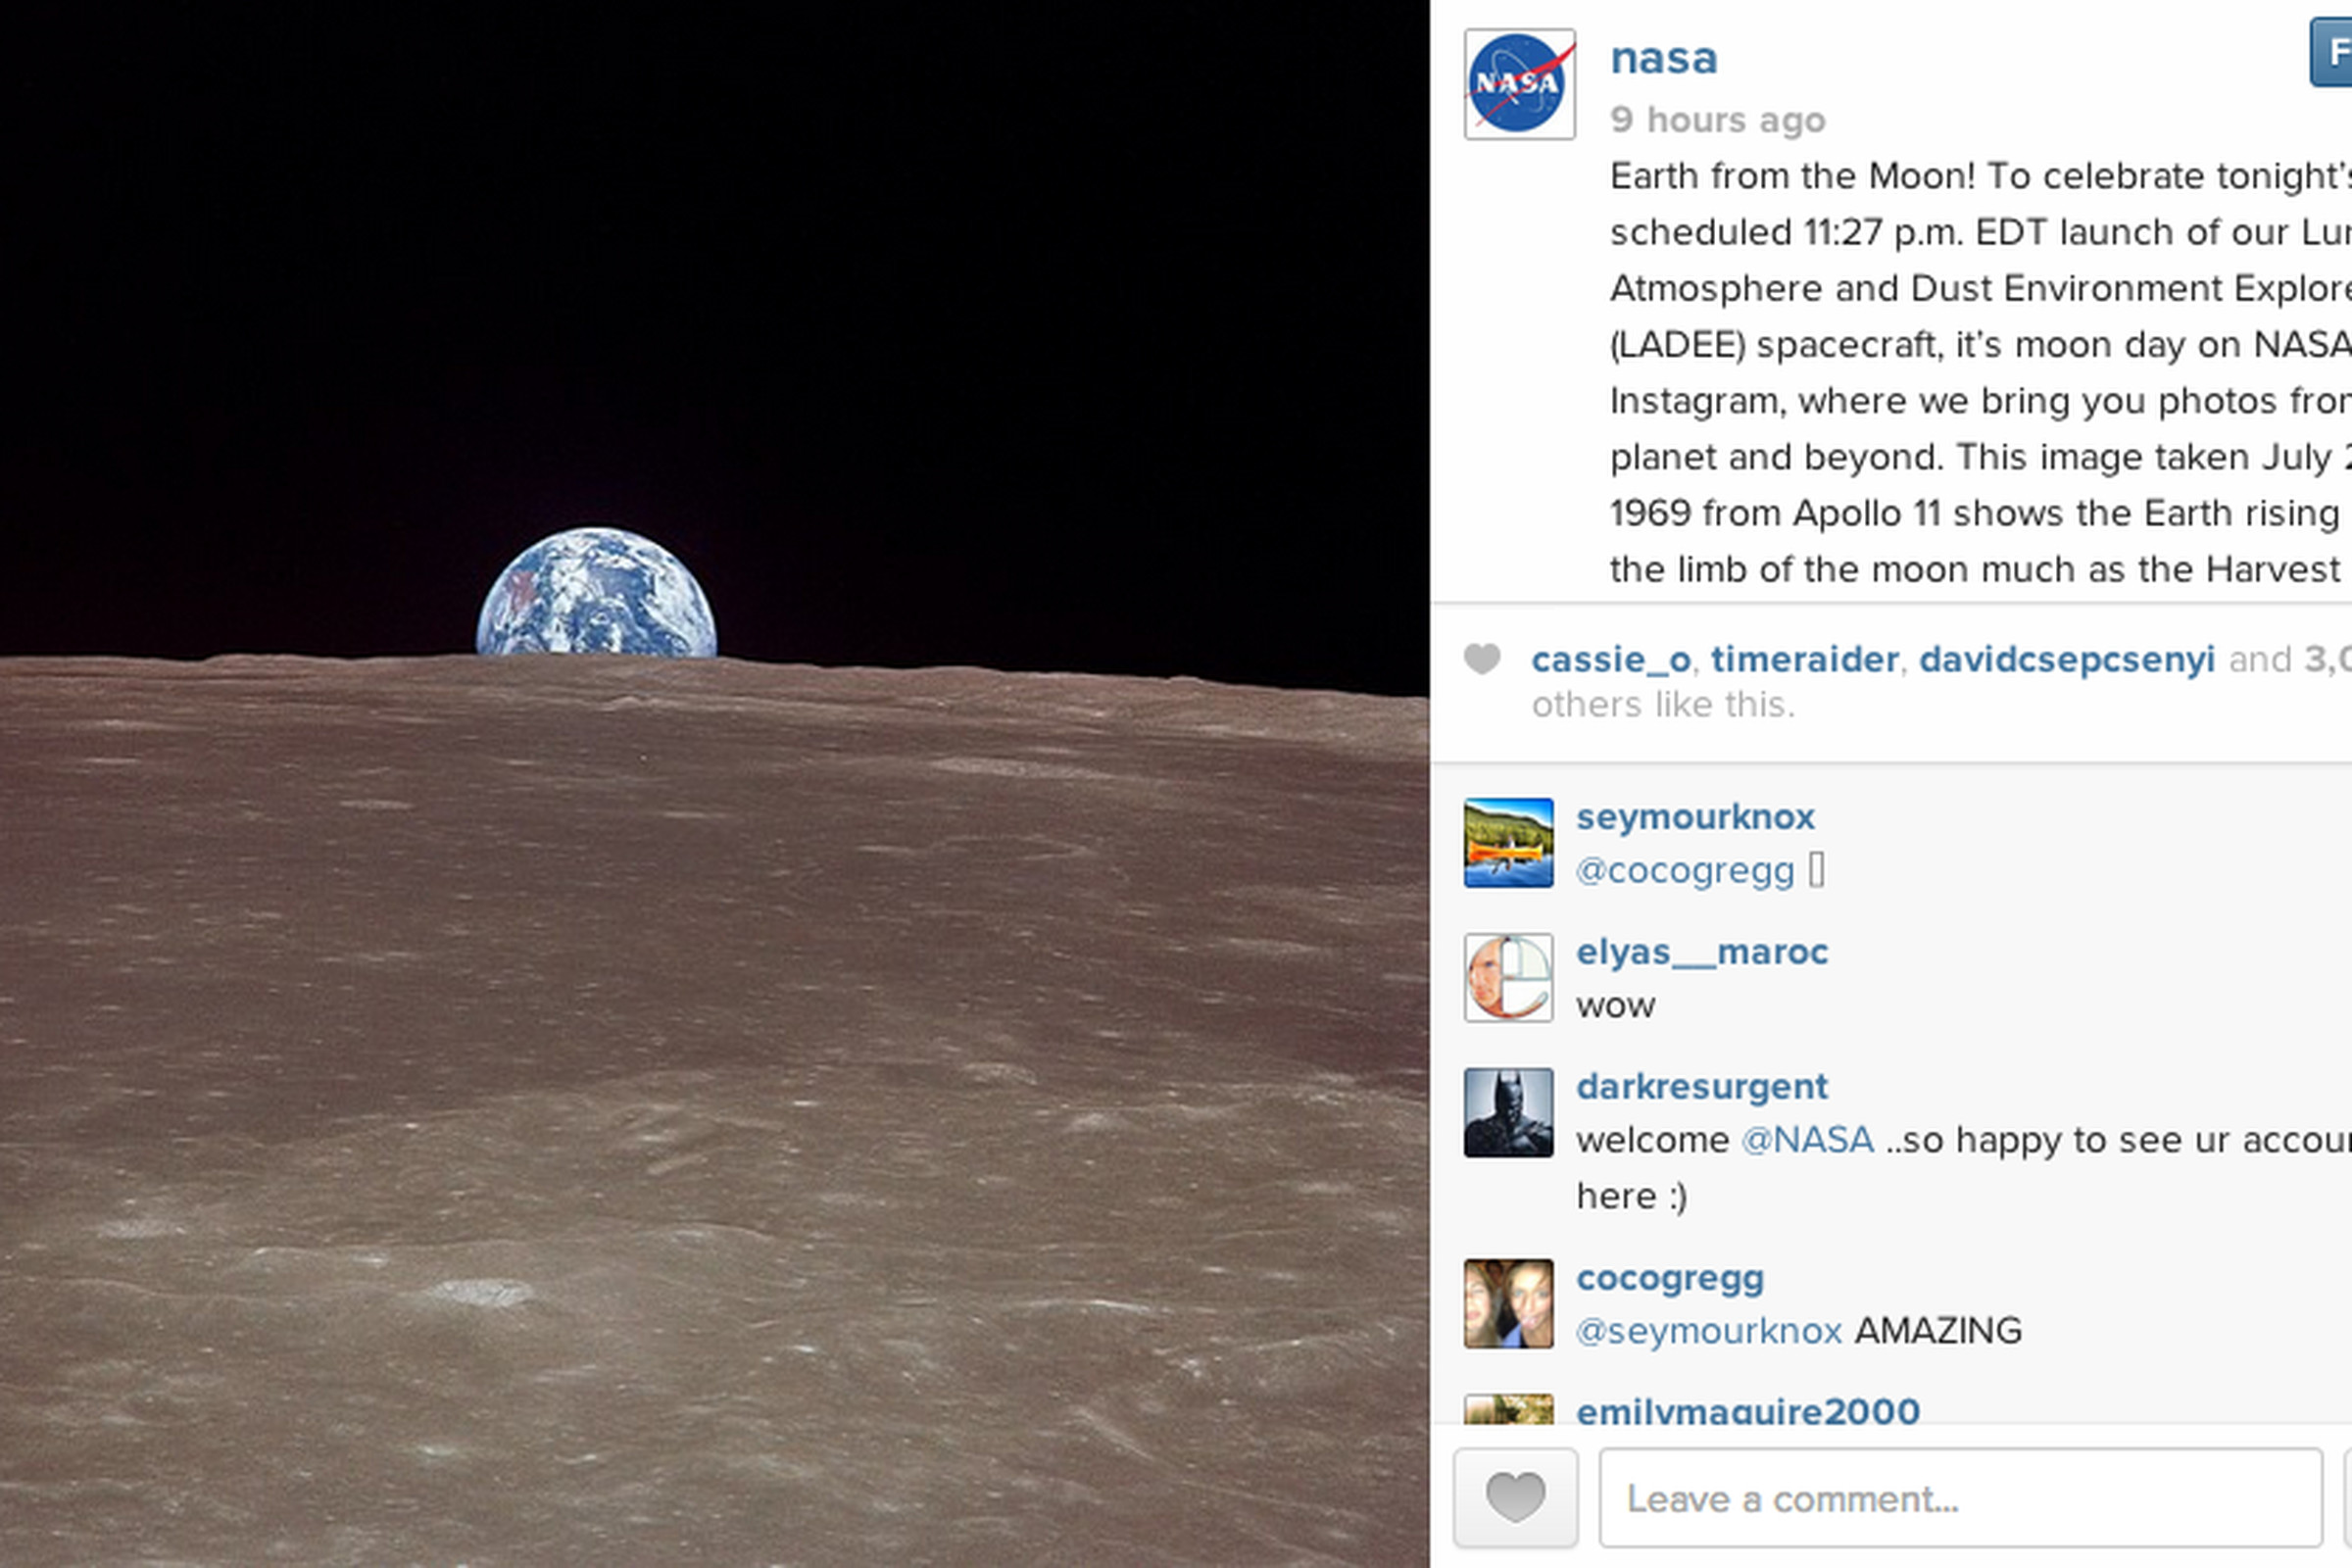 NASA's first Instagram photo